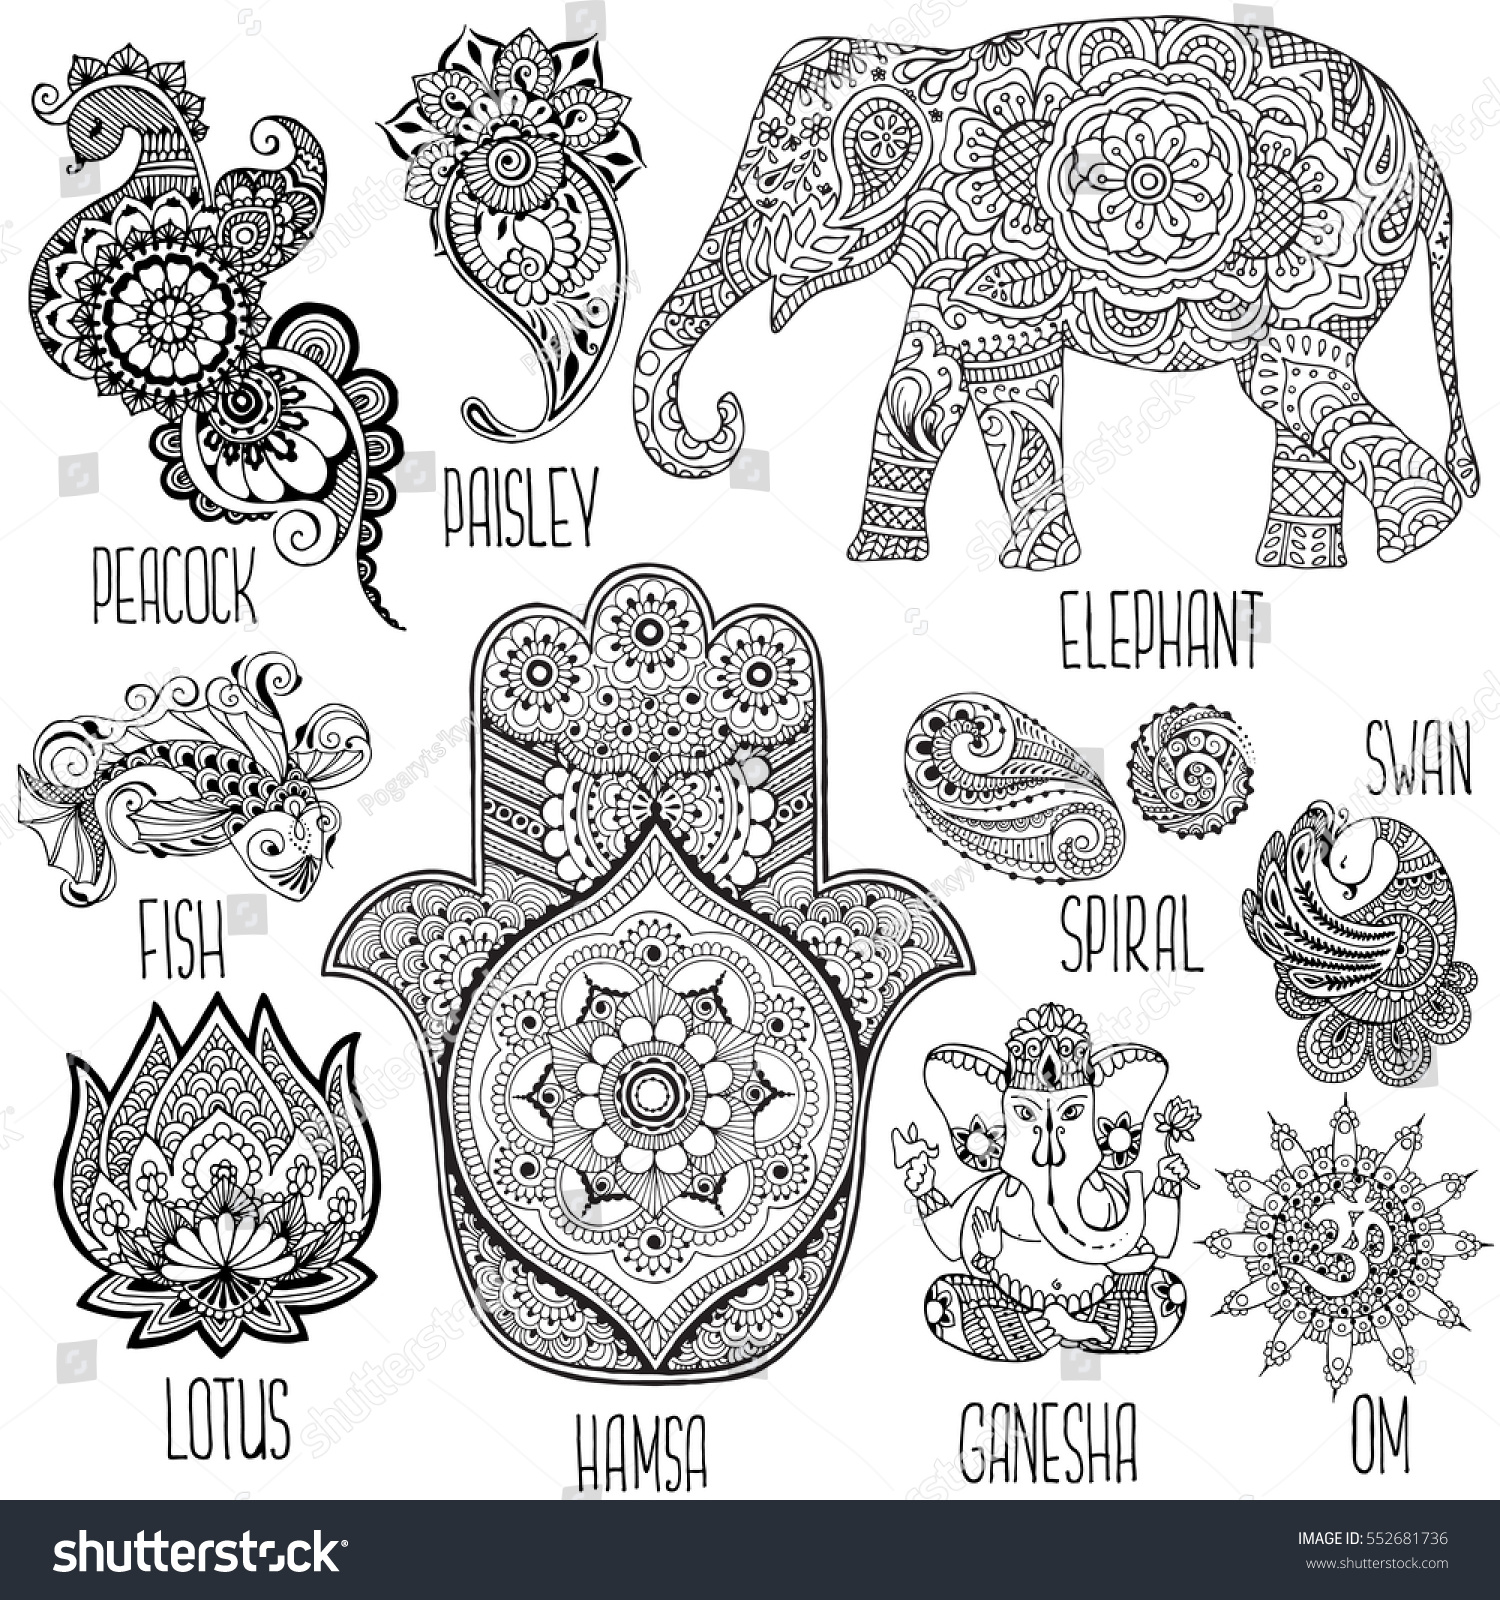 SVG of Lotus, hamsa, elephant, Ganesha and other symbols used in mihendi. svg